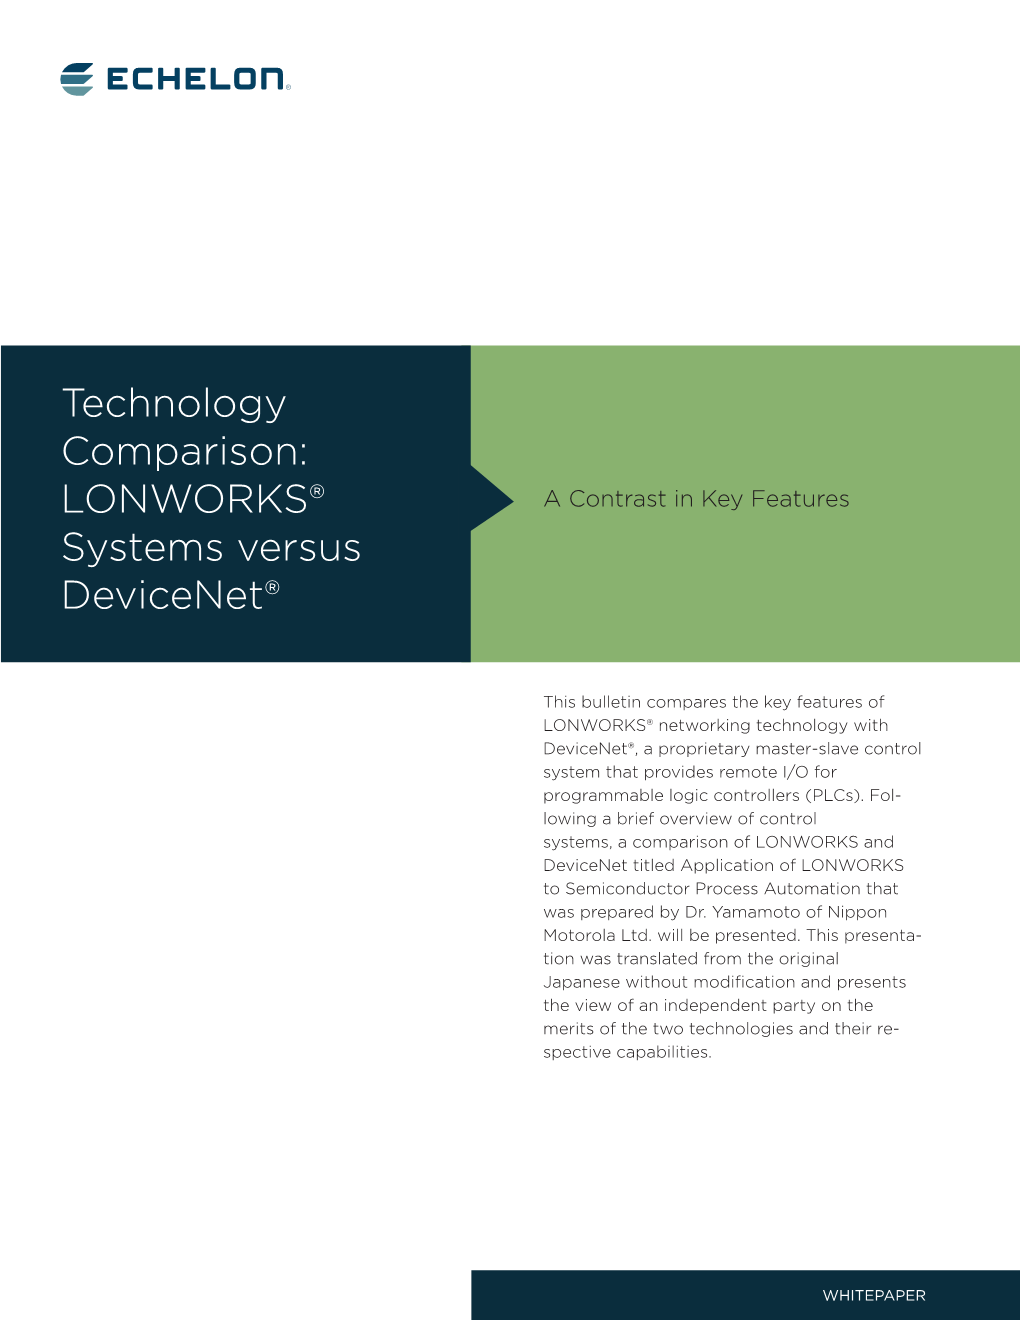 Technology Comparison: LONWORKS® Systems Versus